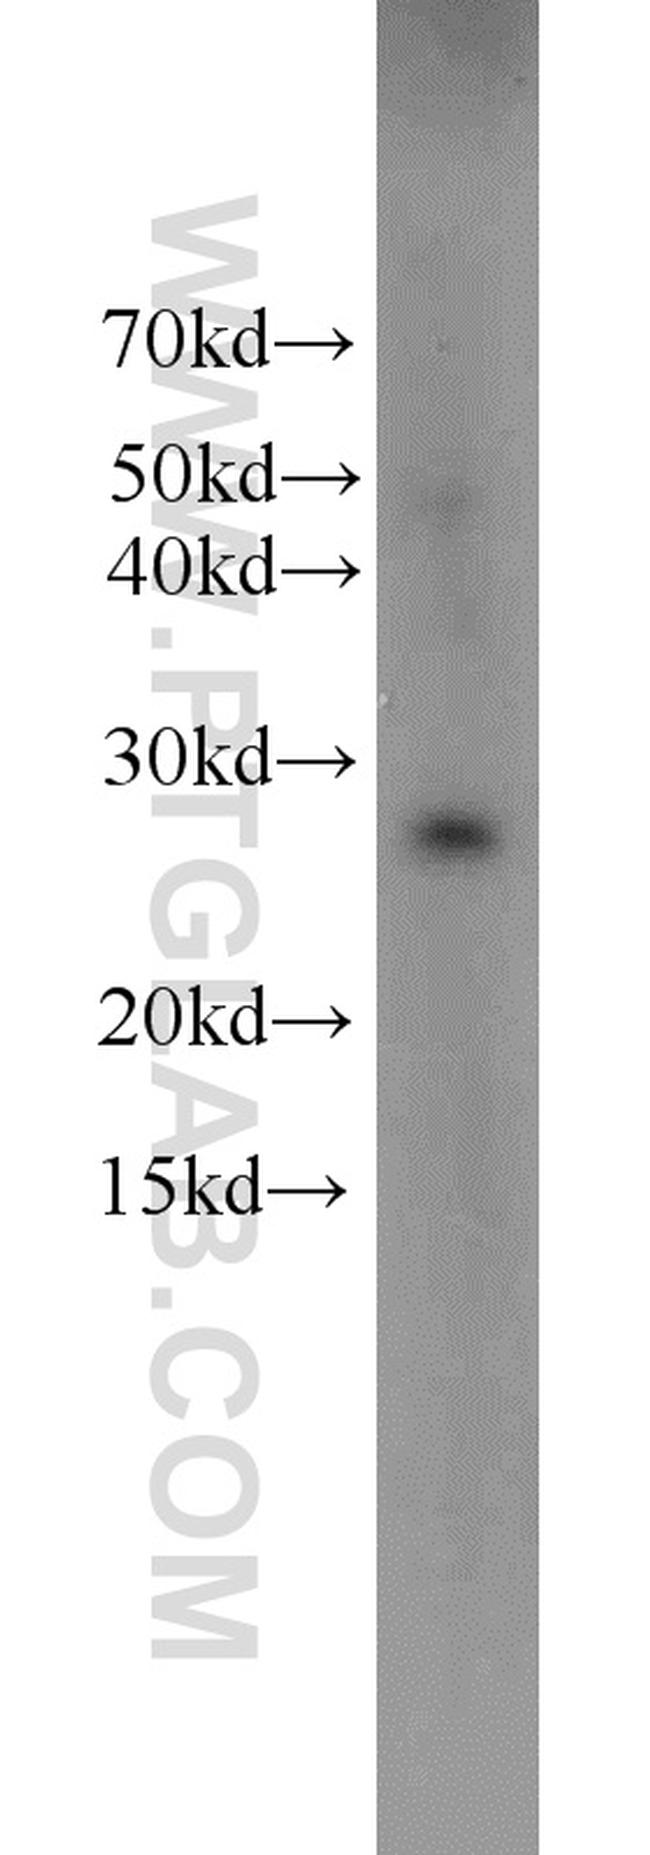 HPGD Antibody in Western Blot (WB)